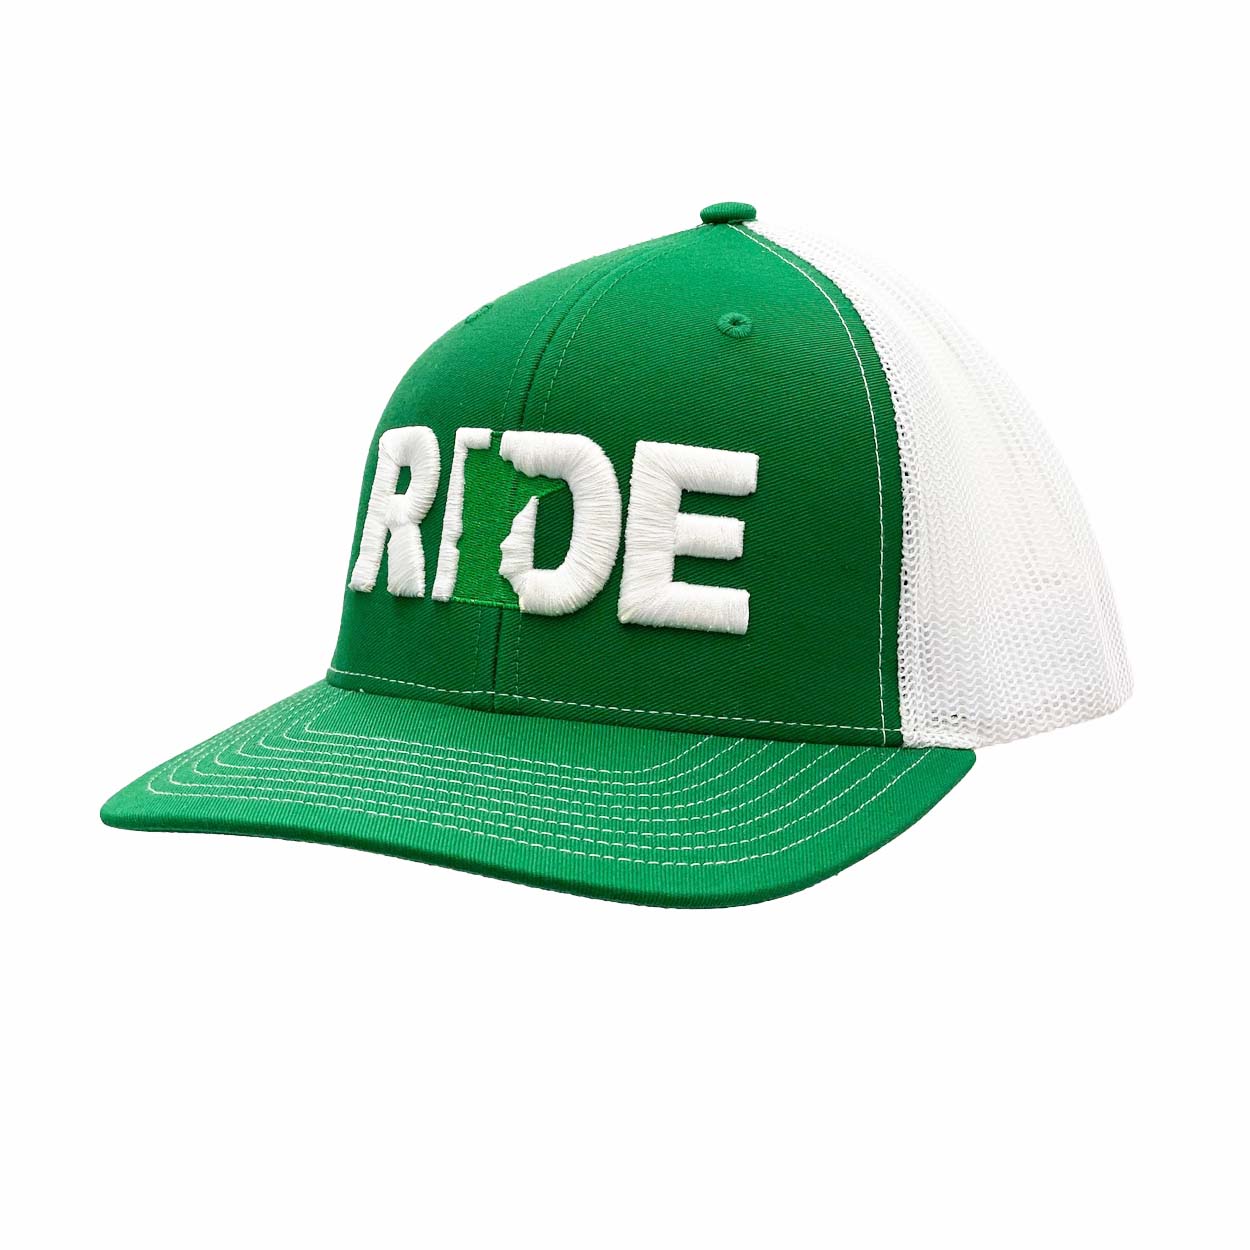 Ride Minnesota Classic Embroidered Snapback Trucker Hat Green/White